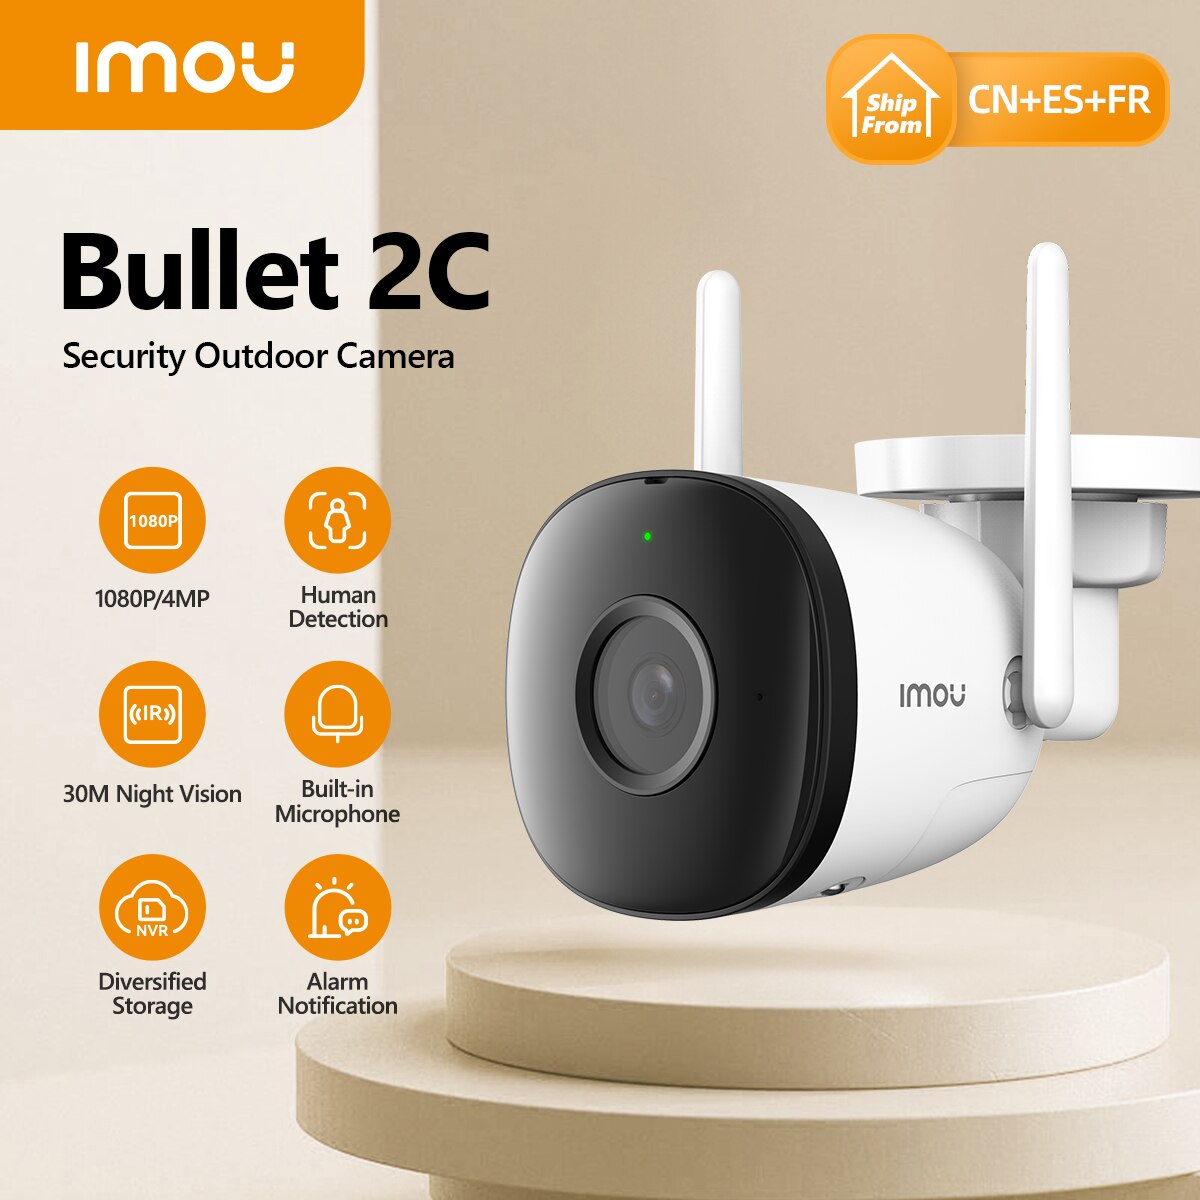 iMou Bullet 2C Outdoor Camera